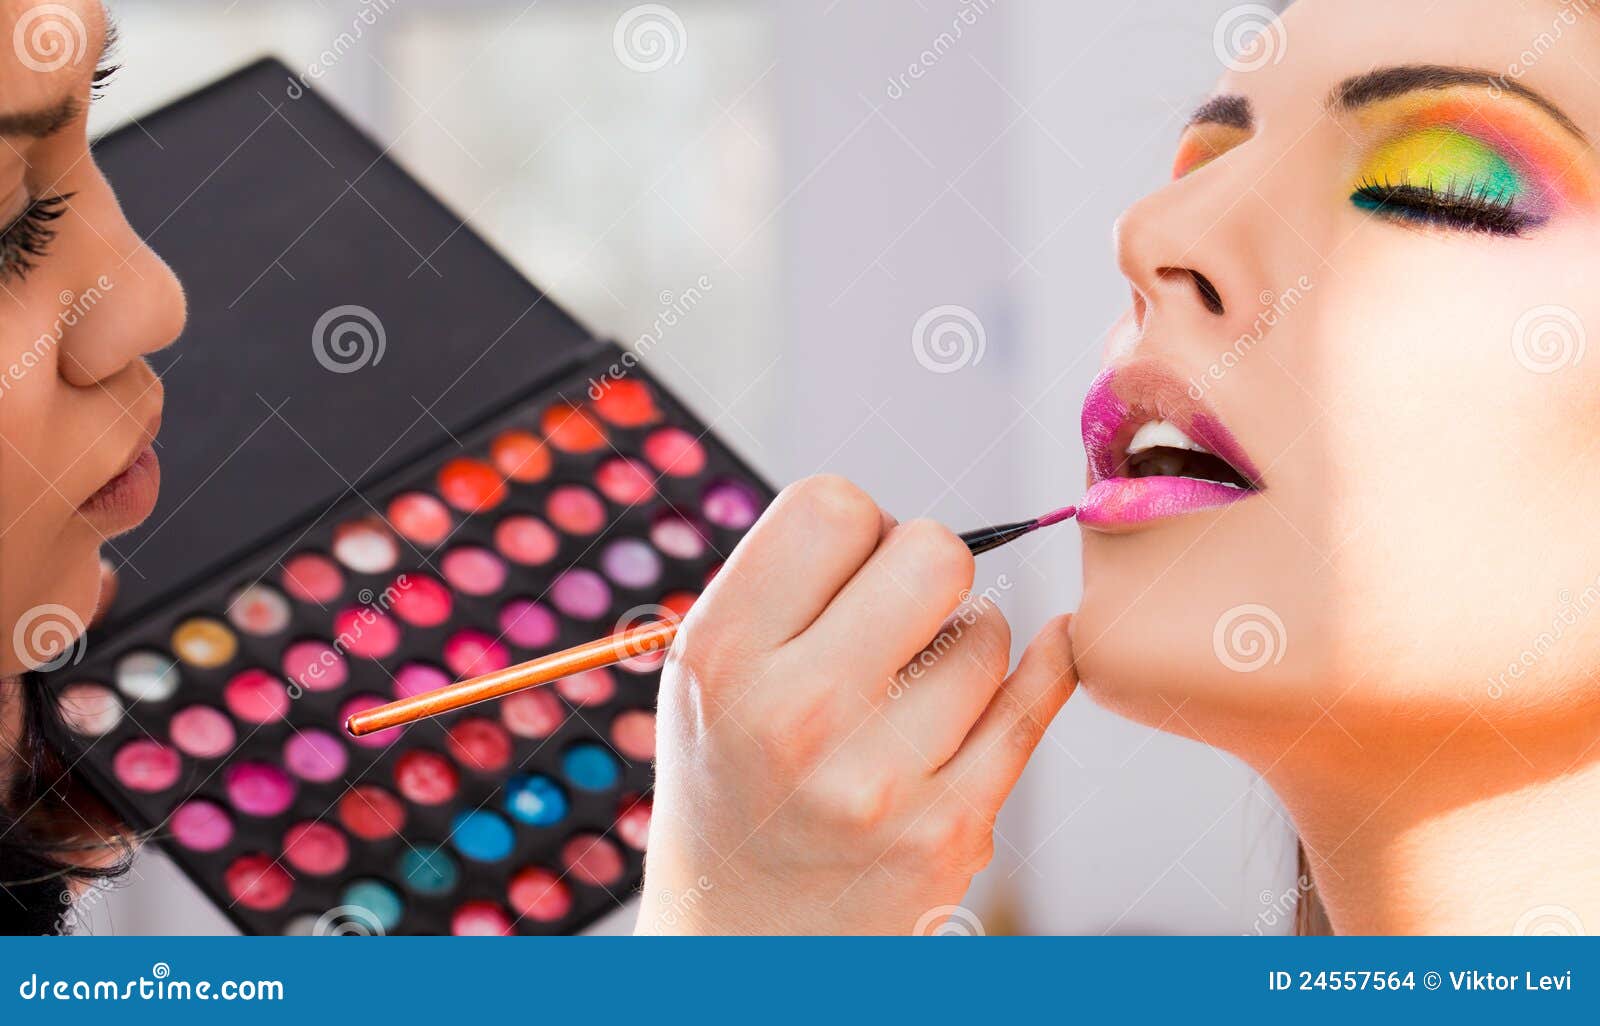 make-up artist